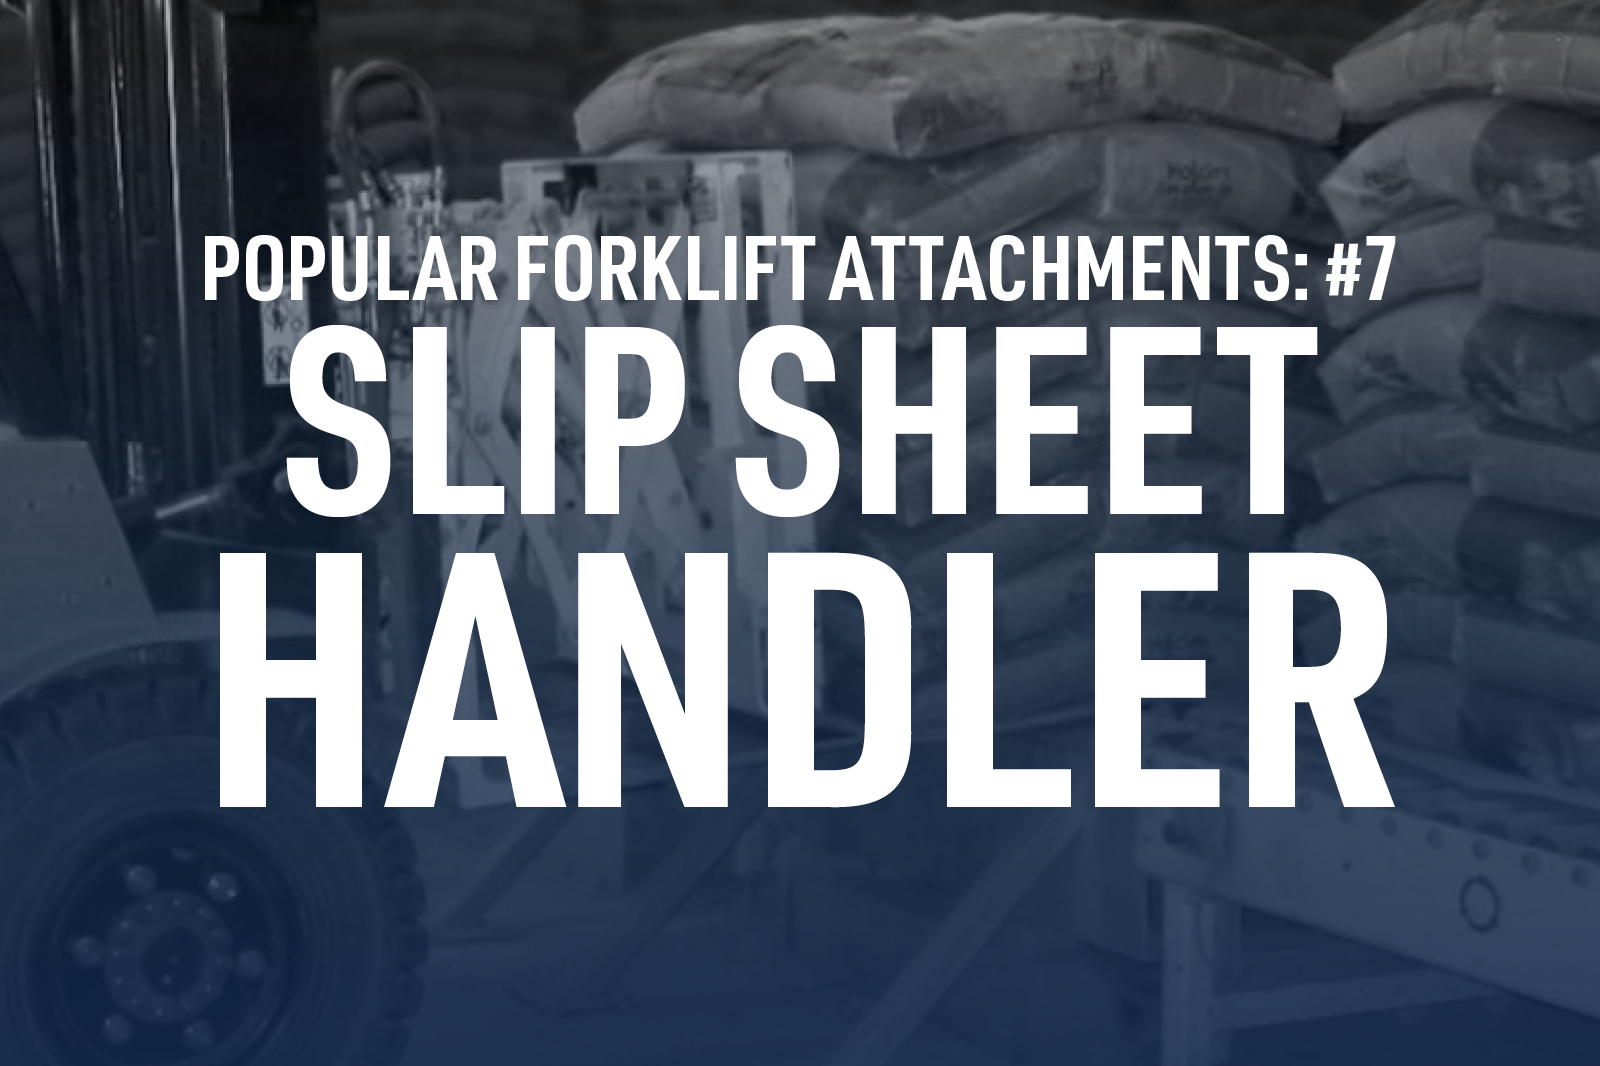 POPULAR FORKLIFT ATTACHMENTS - #7 SLIP SHEET HANDLER1-1